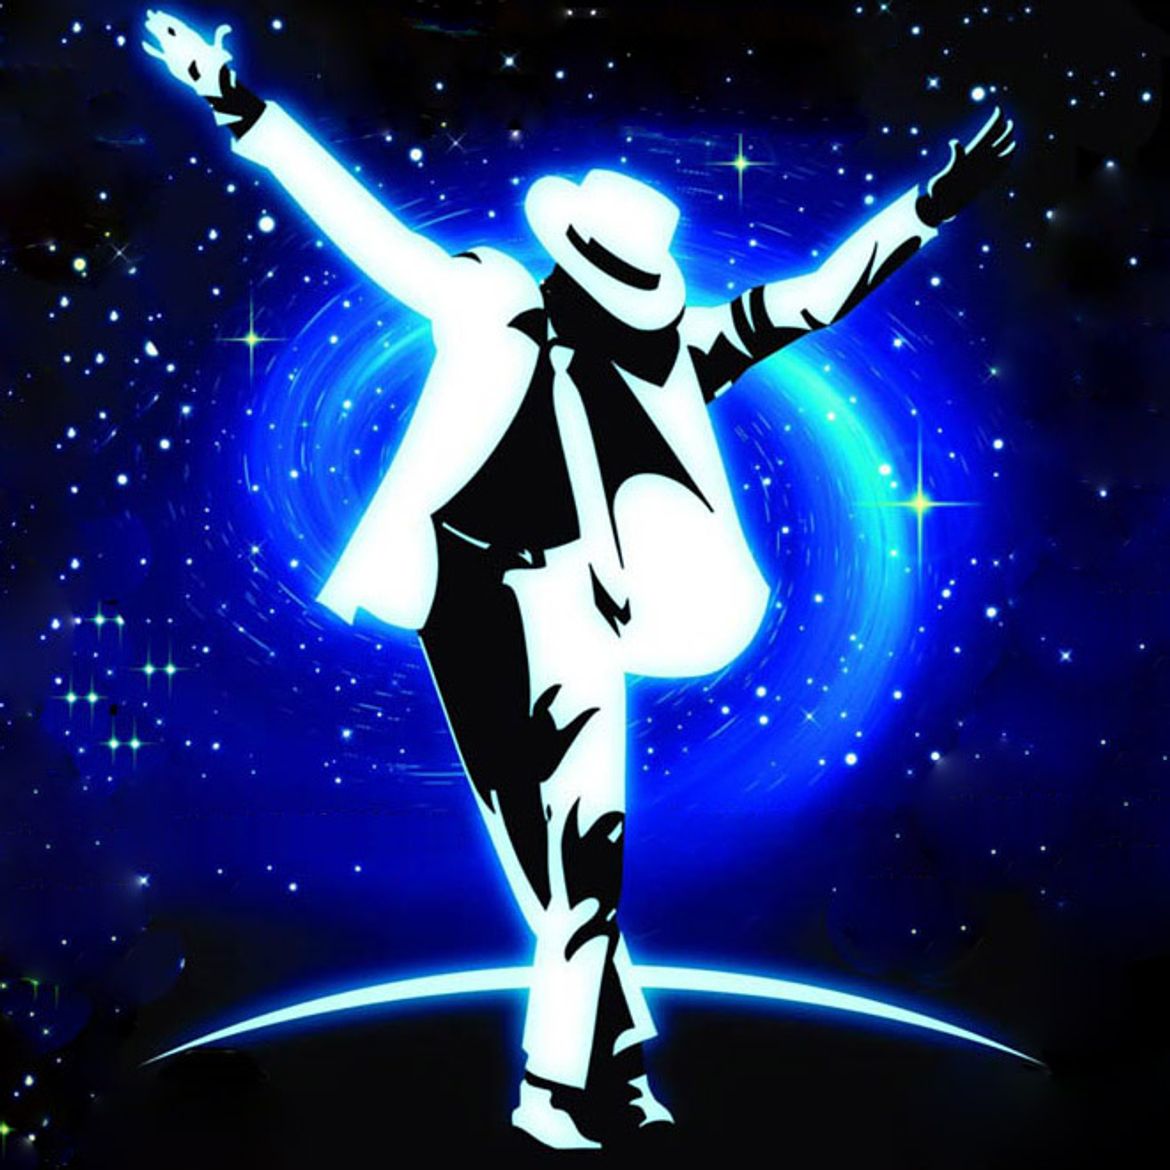 Michael jackson moonwalker. Michael Jackson's Moonwalker. Michael Jackson Dancing.